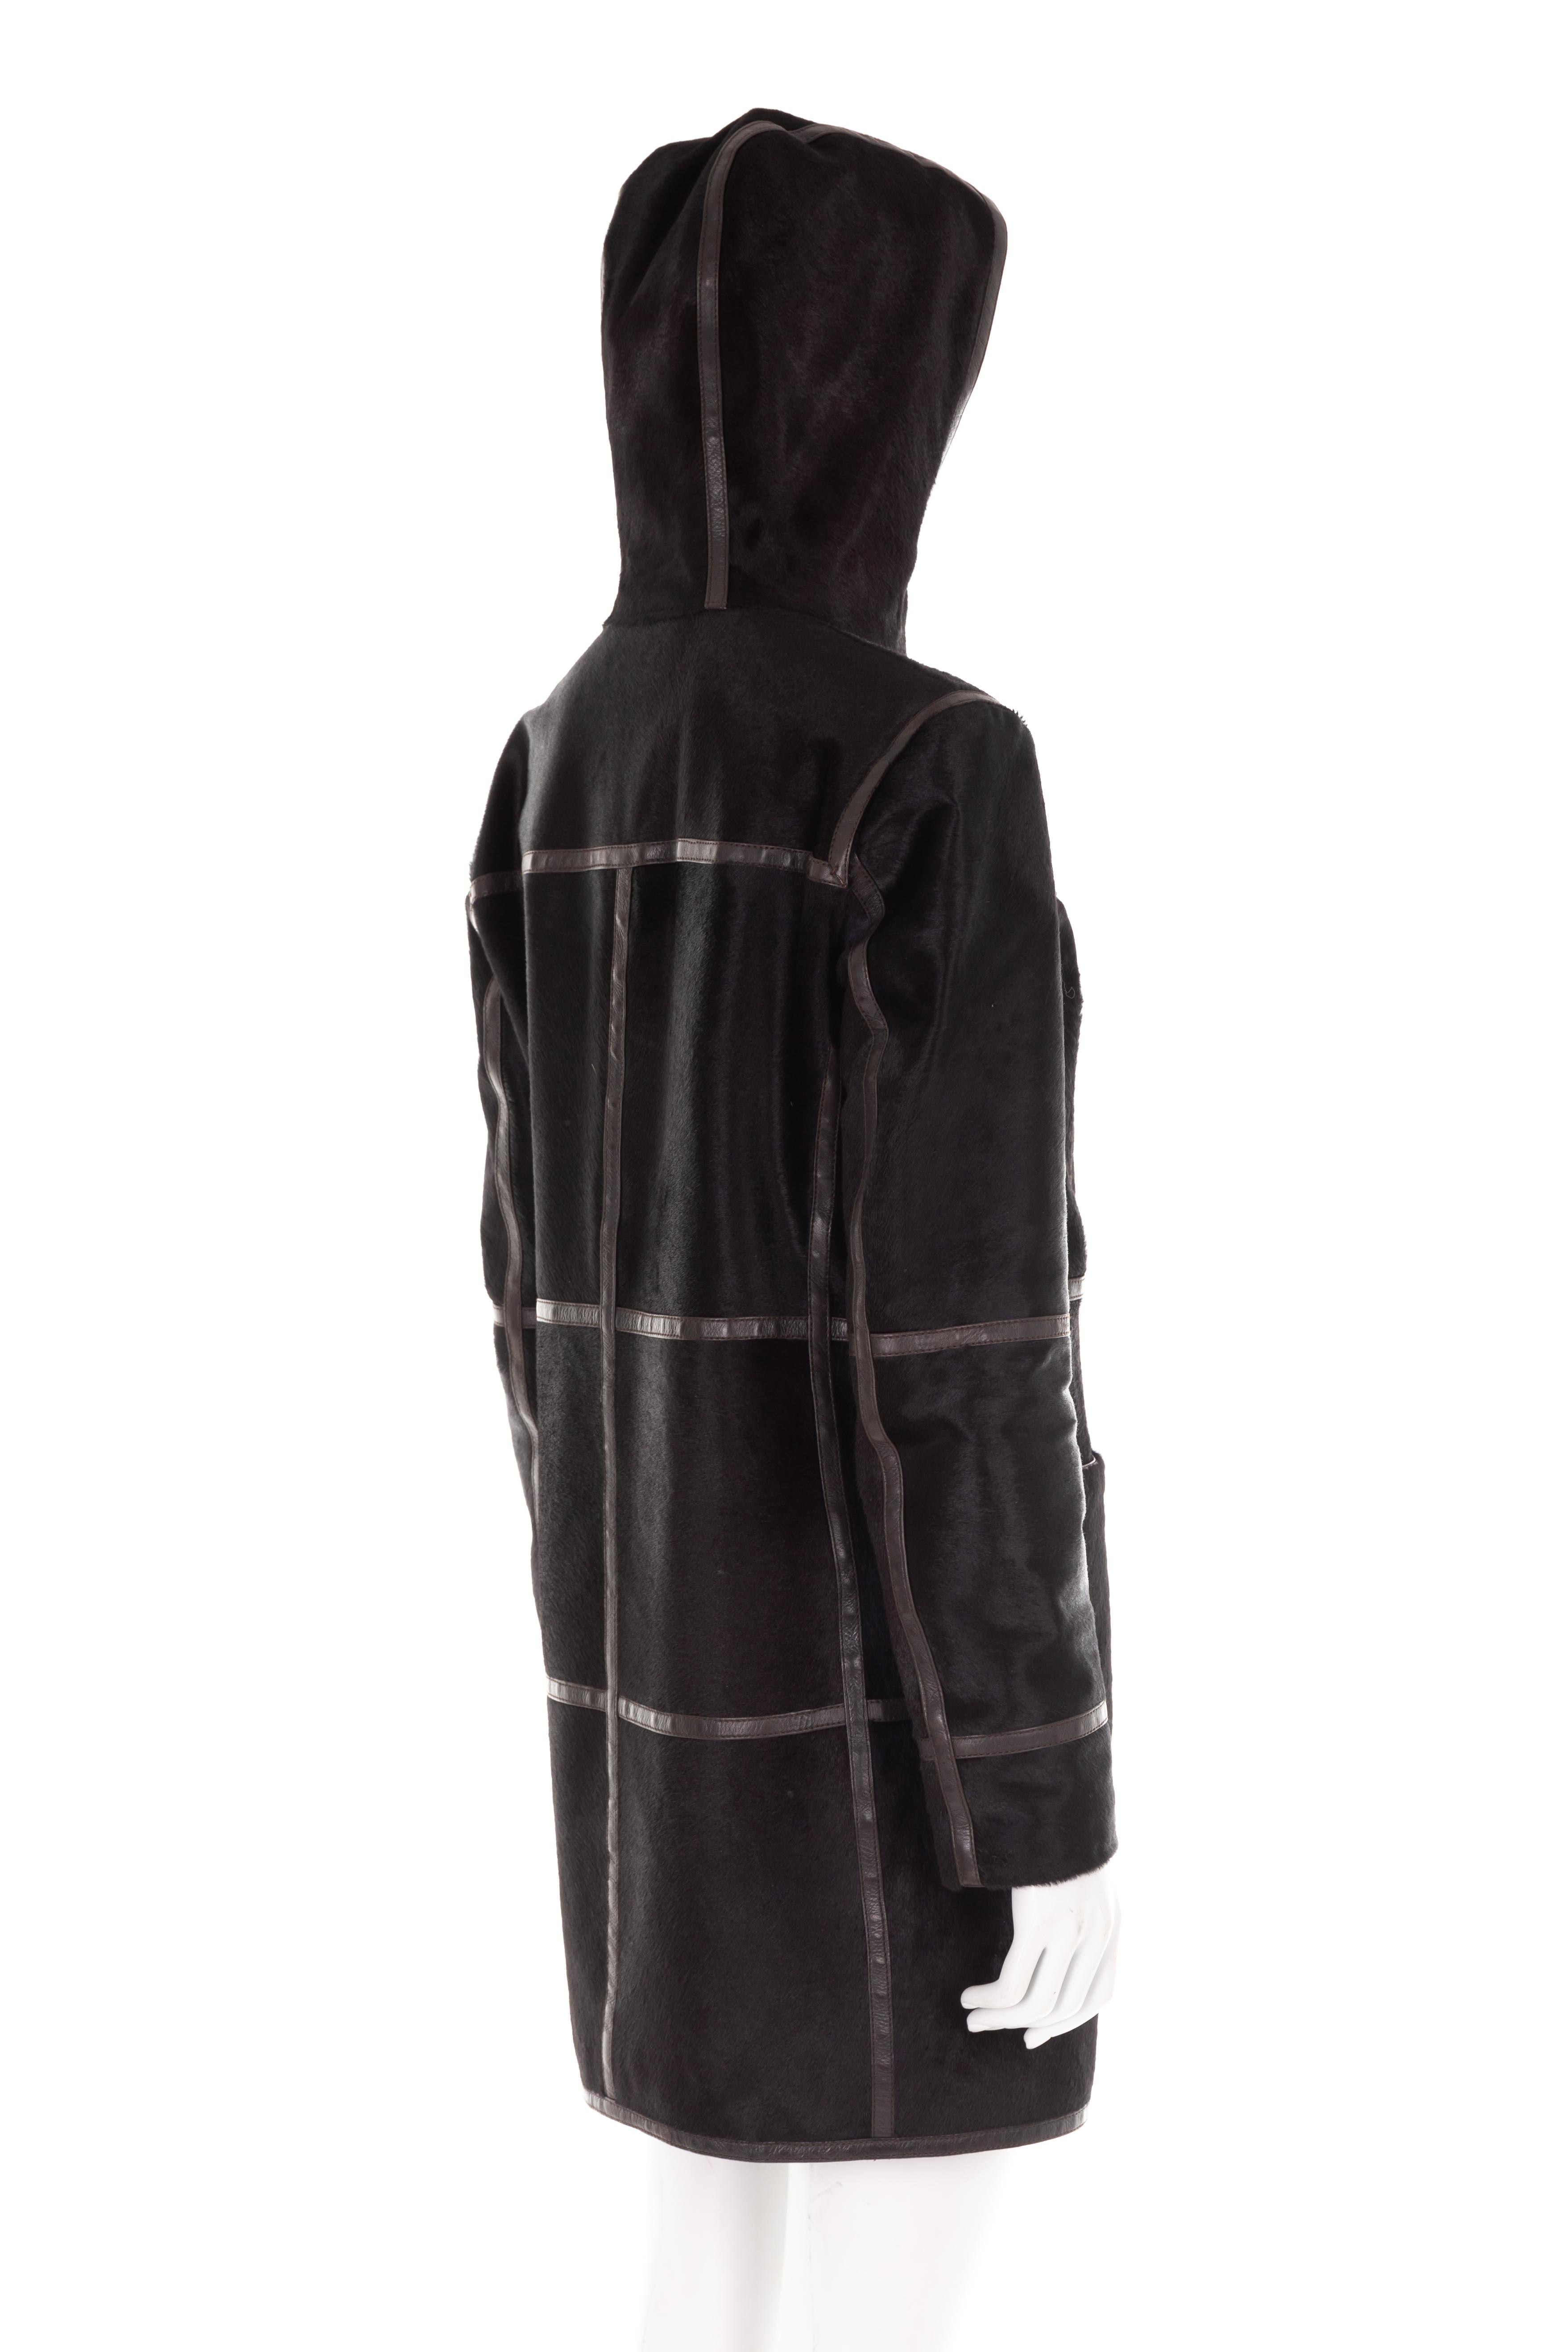 Prada by Miuccia Prada F/W 2005 black calfskin hooded coat  For Sale 3